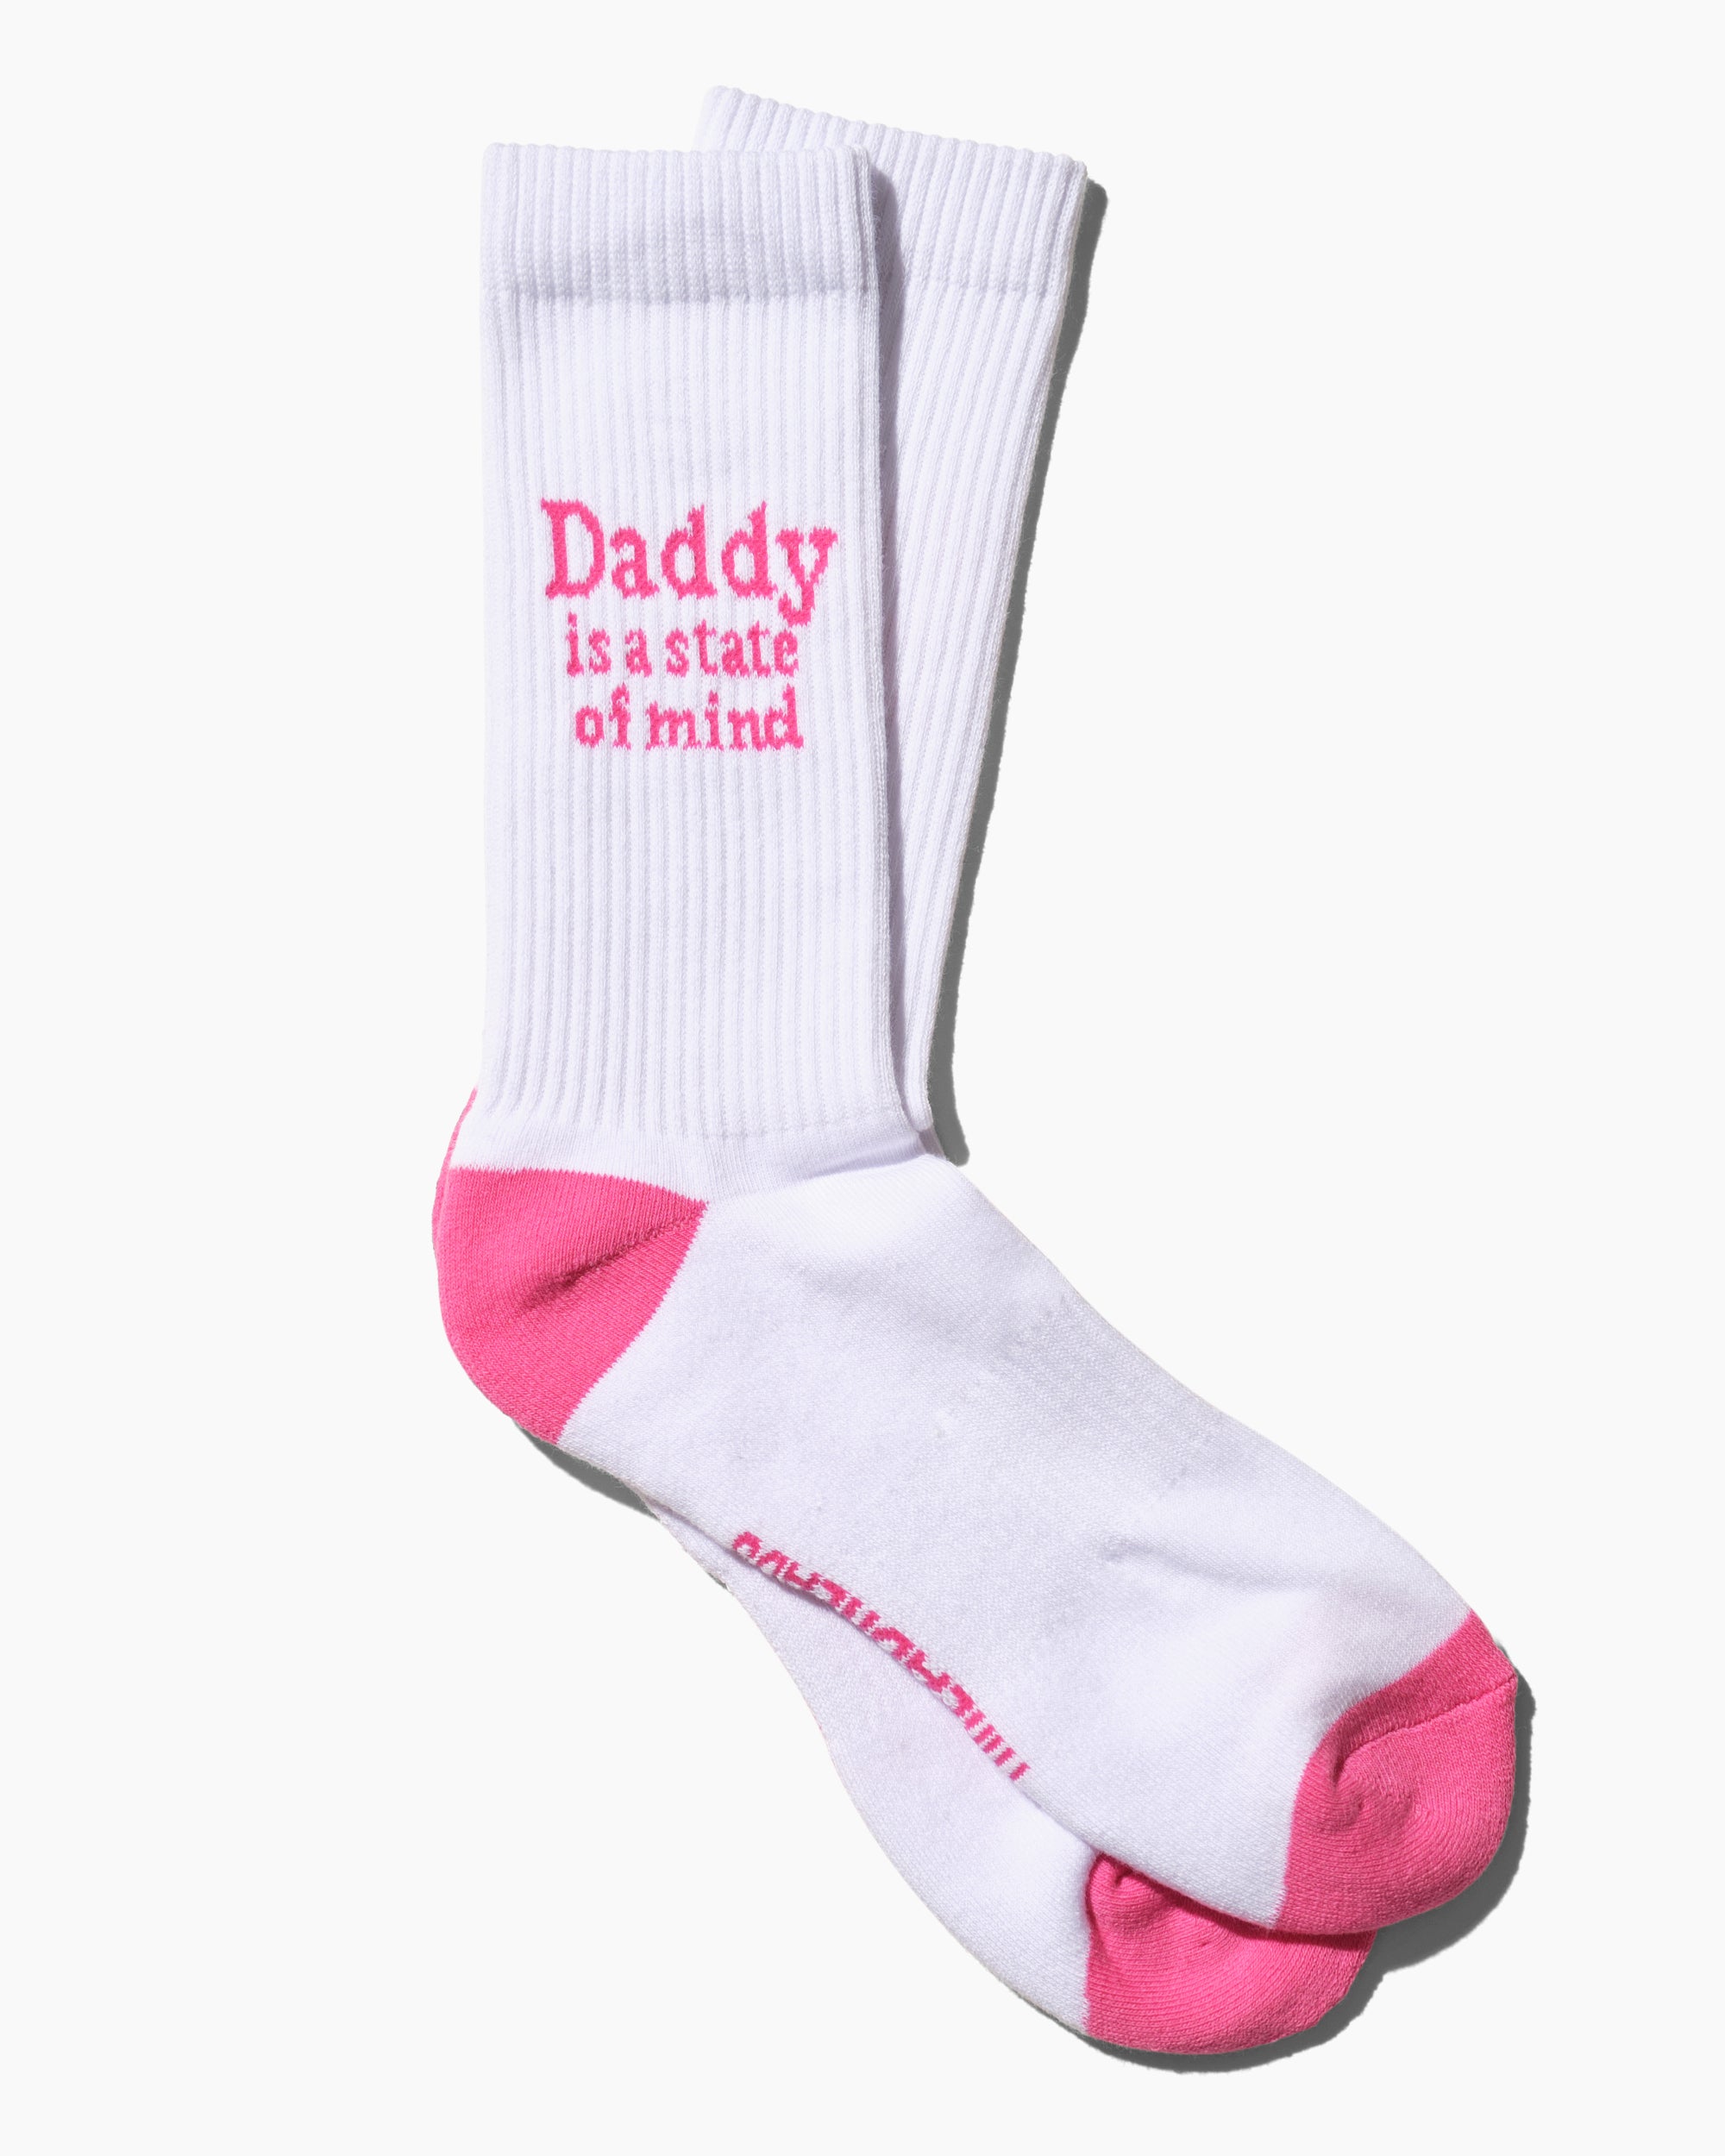 Daddy Socks